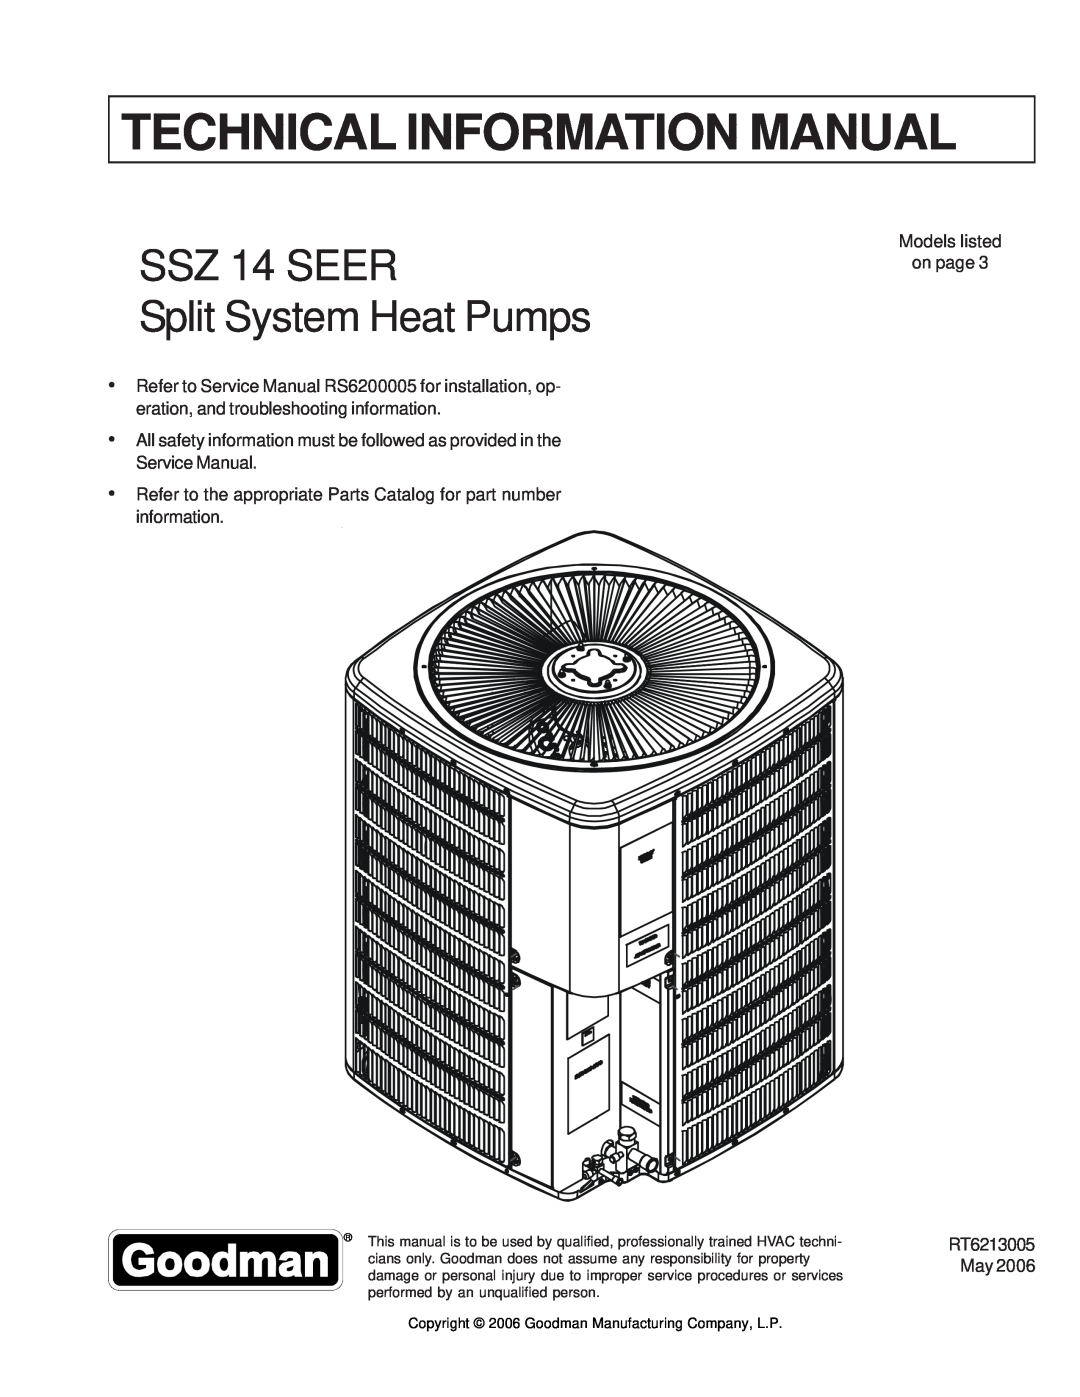 Goodman Mfg SSZ140181A service manual Technical Information Manual, SSZ 14 SEER Split System Heat Pumps 